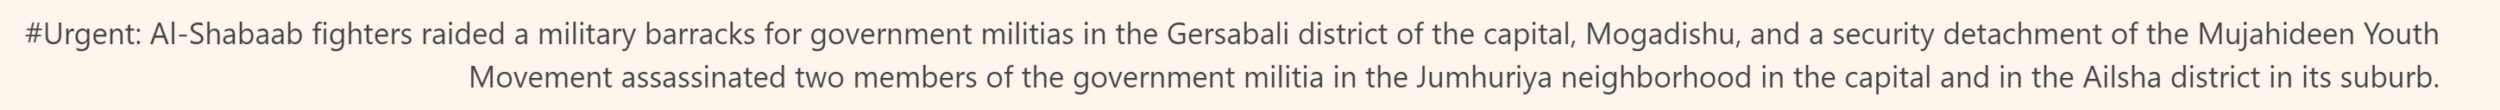 (Claim) al-Shabaab: Mujahideen Raided Somalian Army Military Barracks in Gersabali District and Assassinated Two Somalian Forces in the Jumhuriya Neighbourhood and Alisha District, Mogadishu, Somalia - 21 March 2022